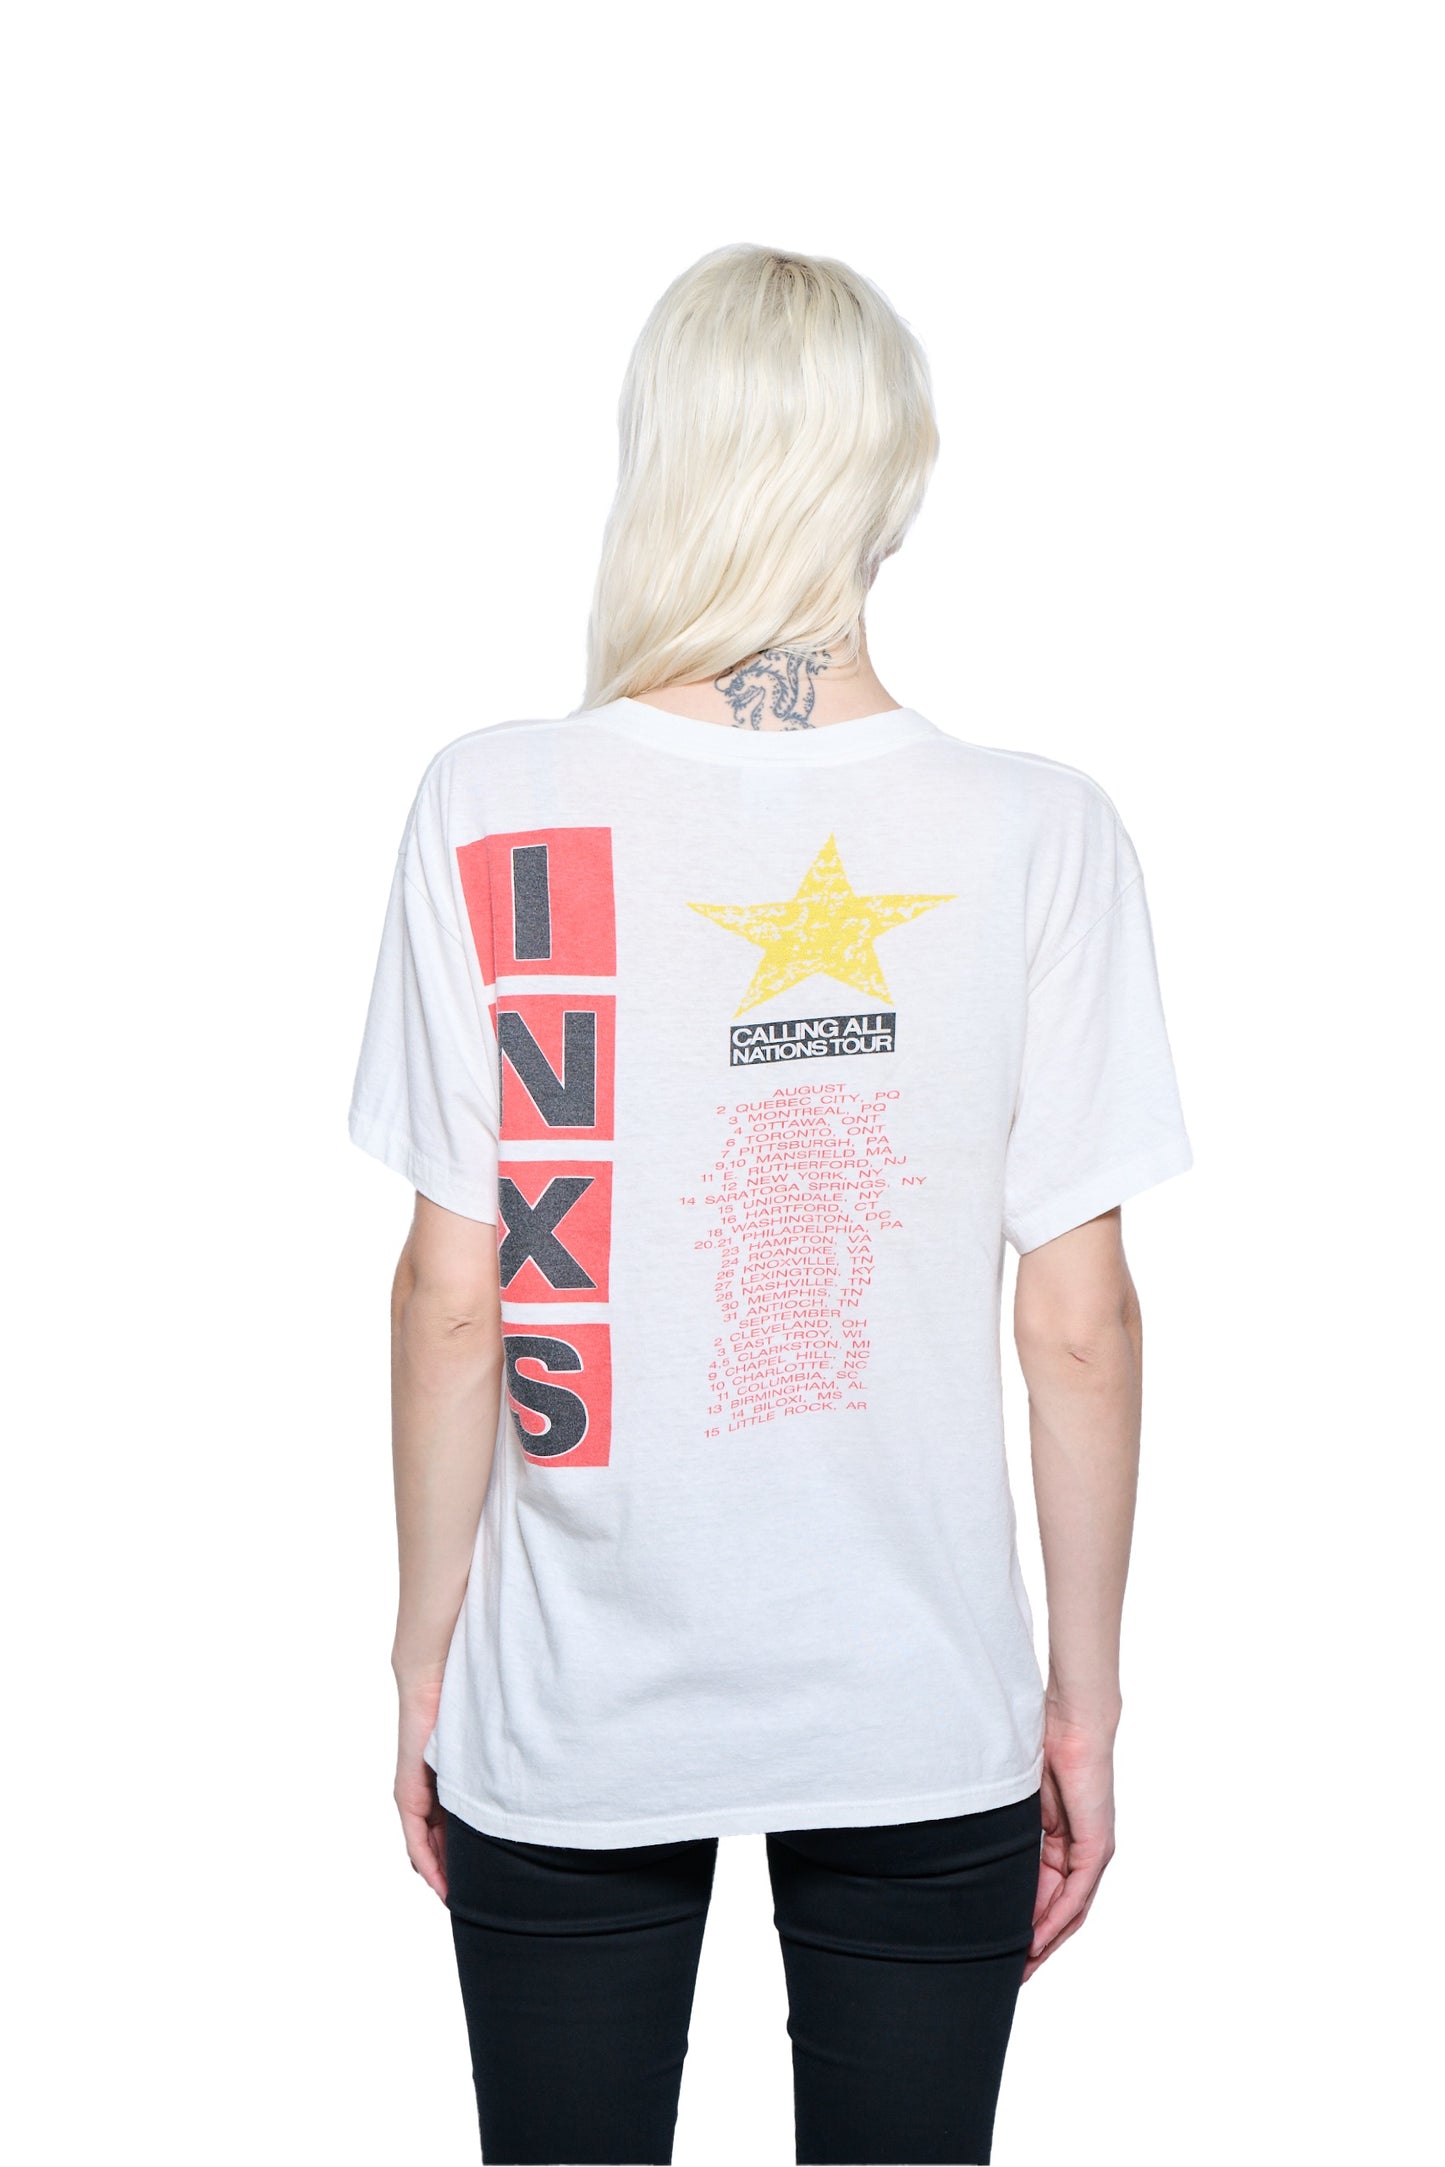 Vintage 1988 INXS Tour T-Shirt